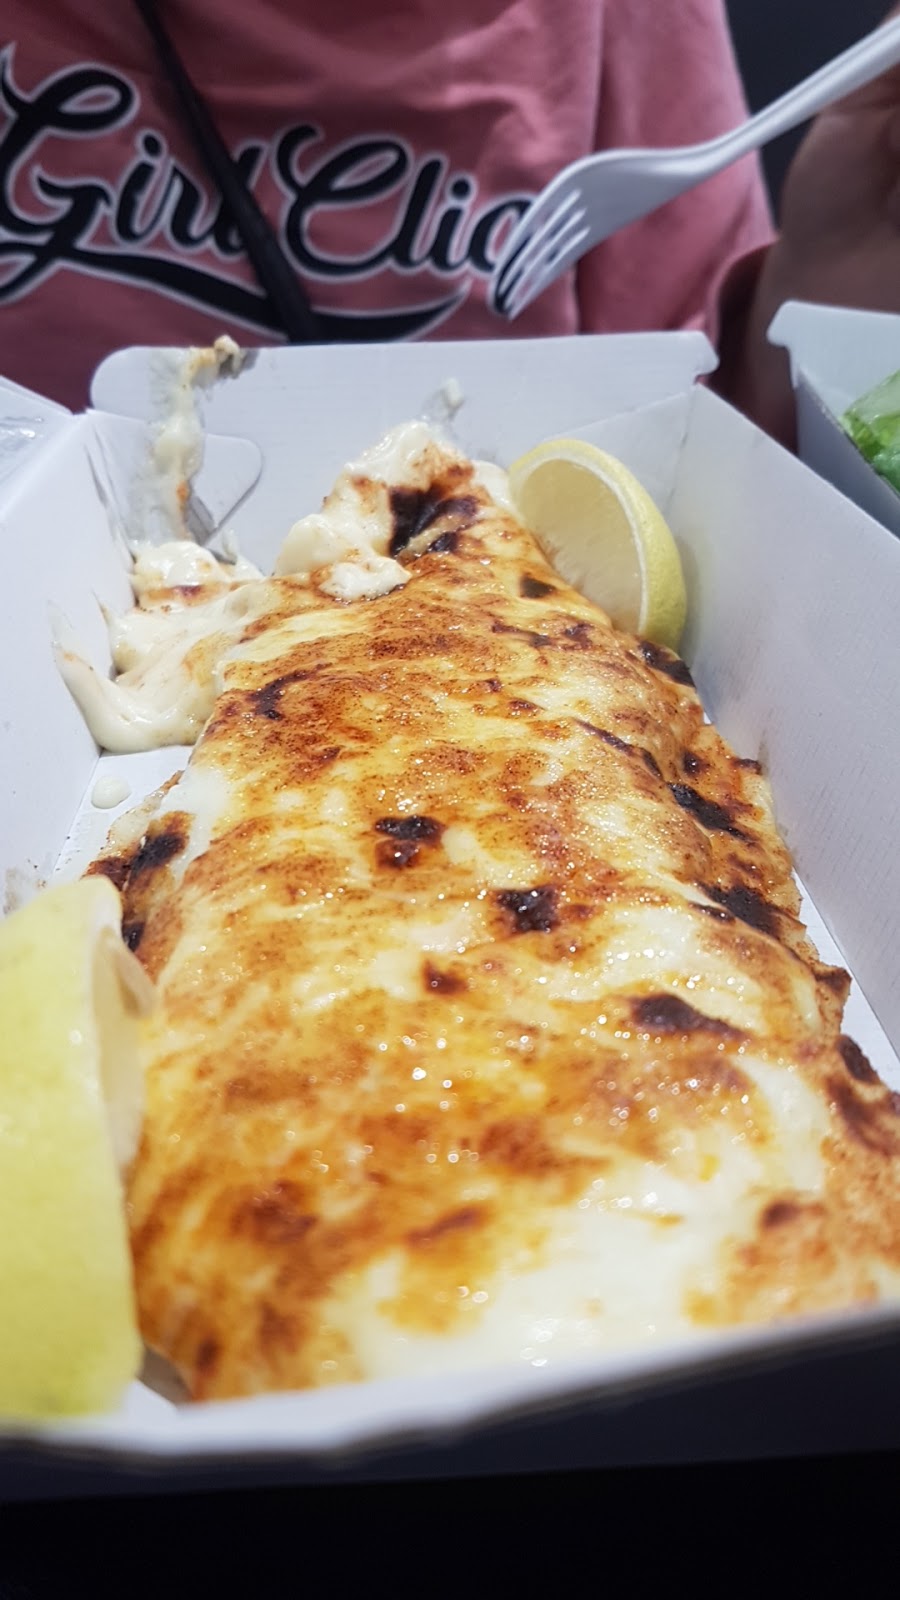 Pacific Ocean Fish & Chips | Campbelltown Mall, shop u10/271 Queen St, Campbelltown NSW 2560, Australia | Phone: (02) 4656 2040